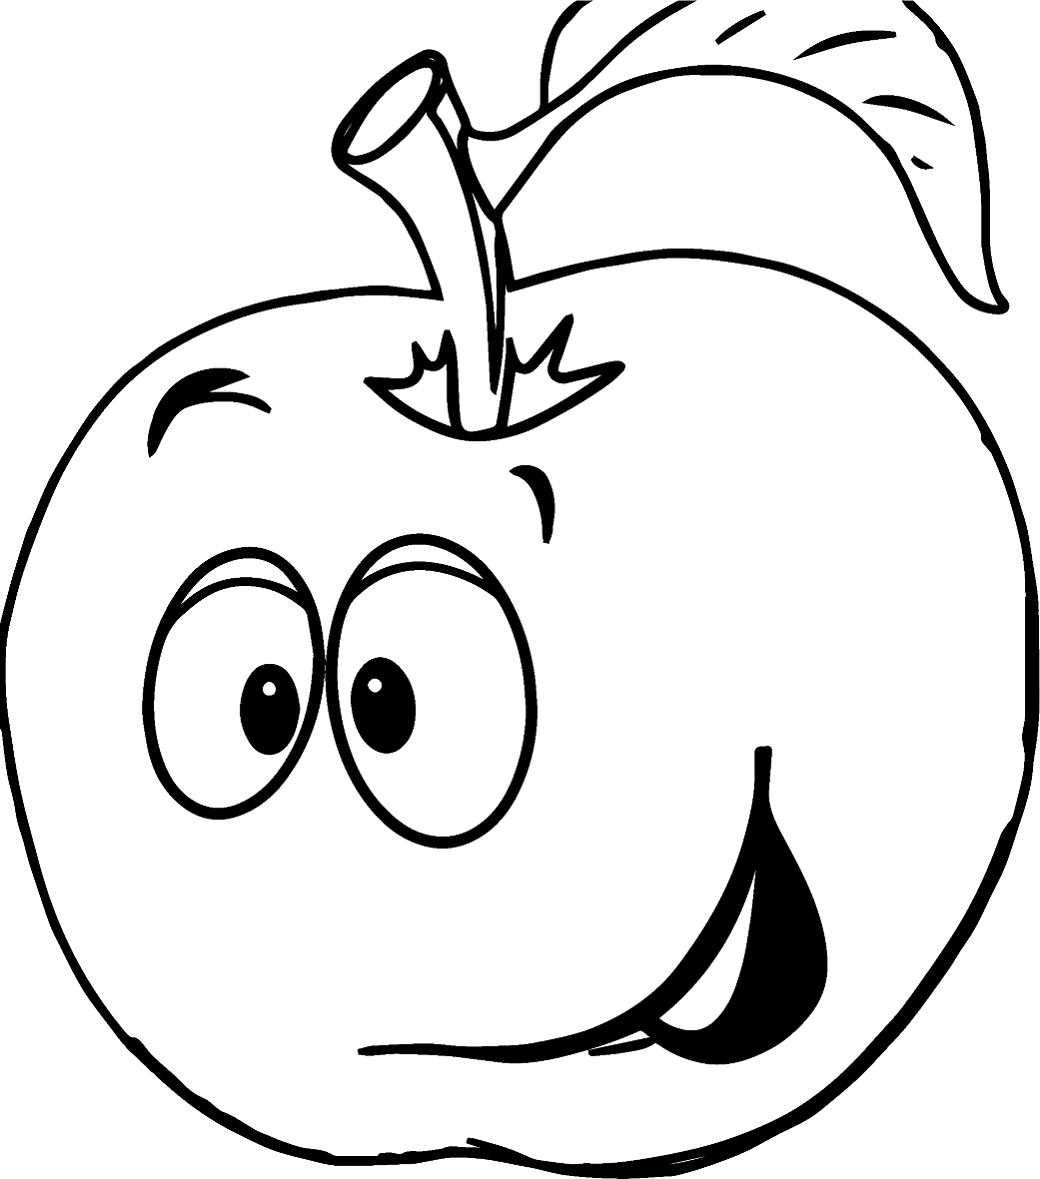 水果卡通苹果 Coloring Page